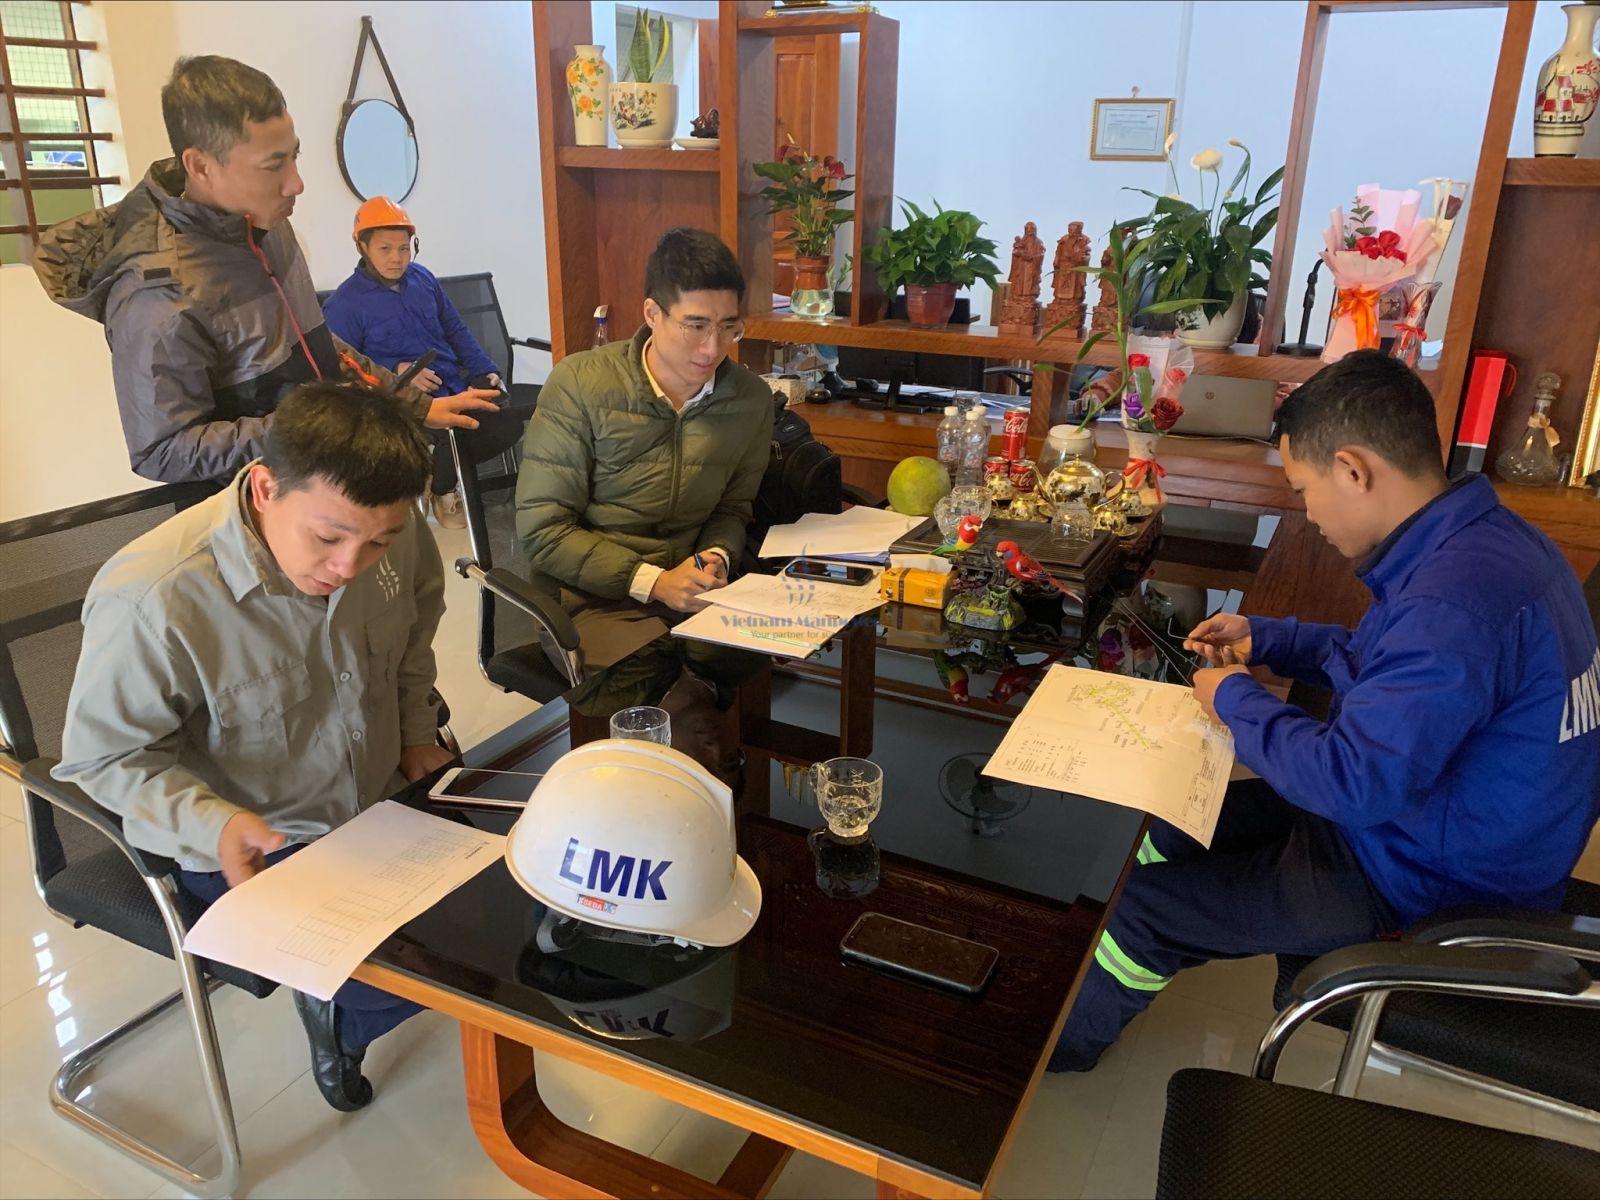 Sinopec recruitment test in Vietnam Manpower opens doors for skilled workers